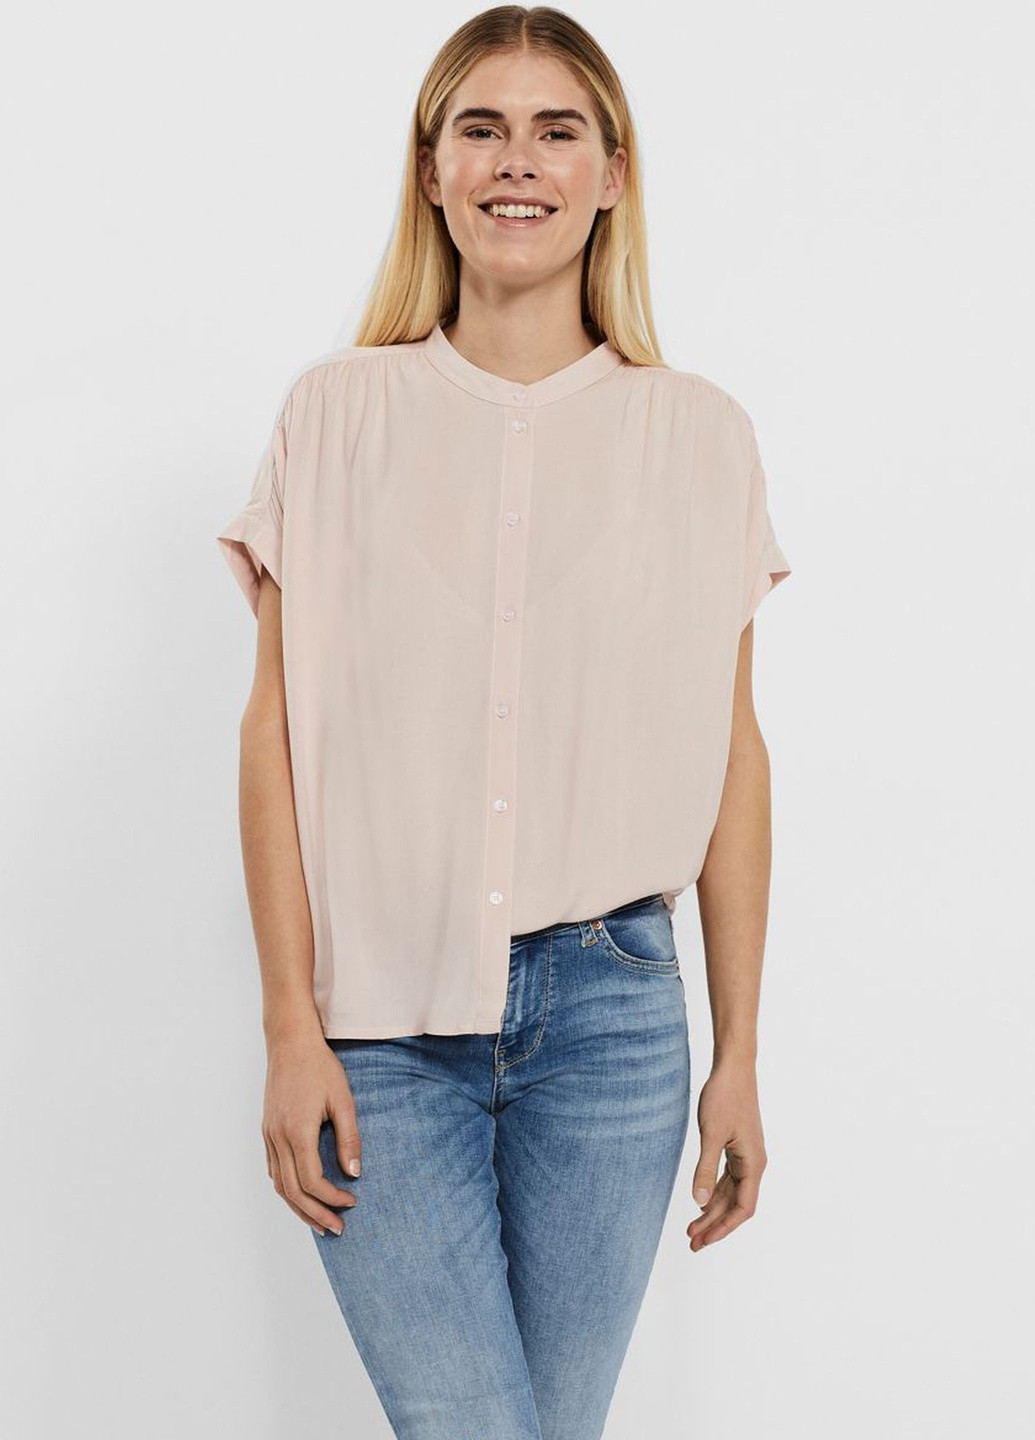 Розовая блуза Vero Moda